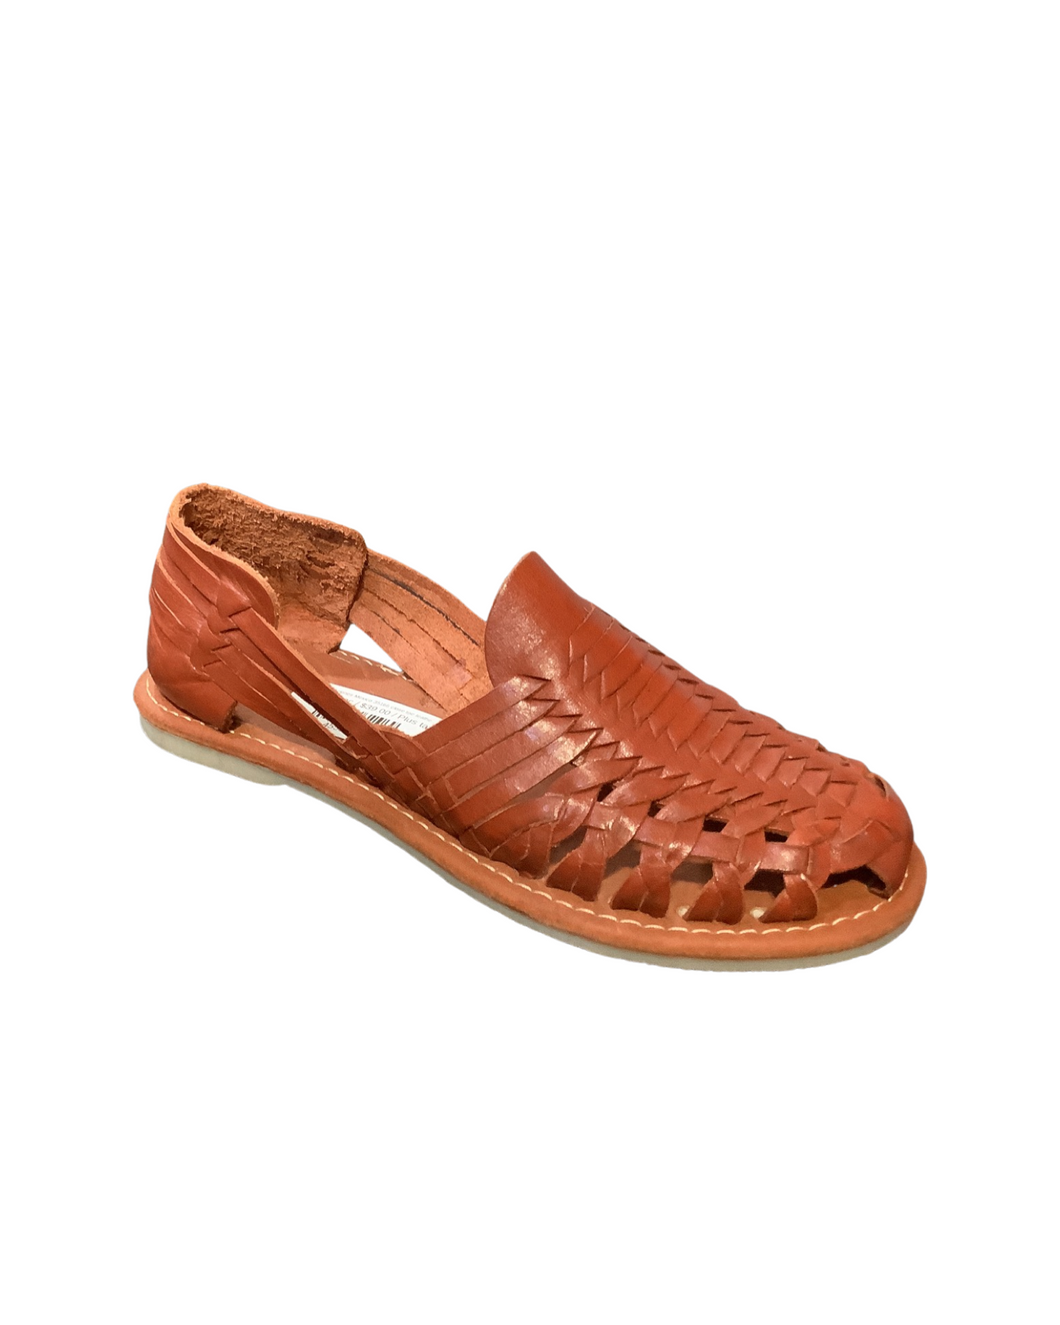 Importaciones Mexico 35166 close toe leather sandals